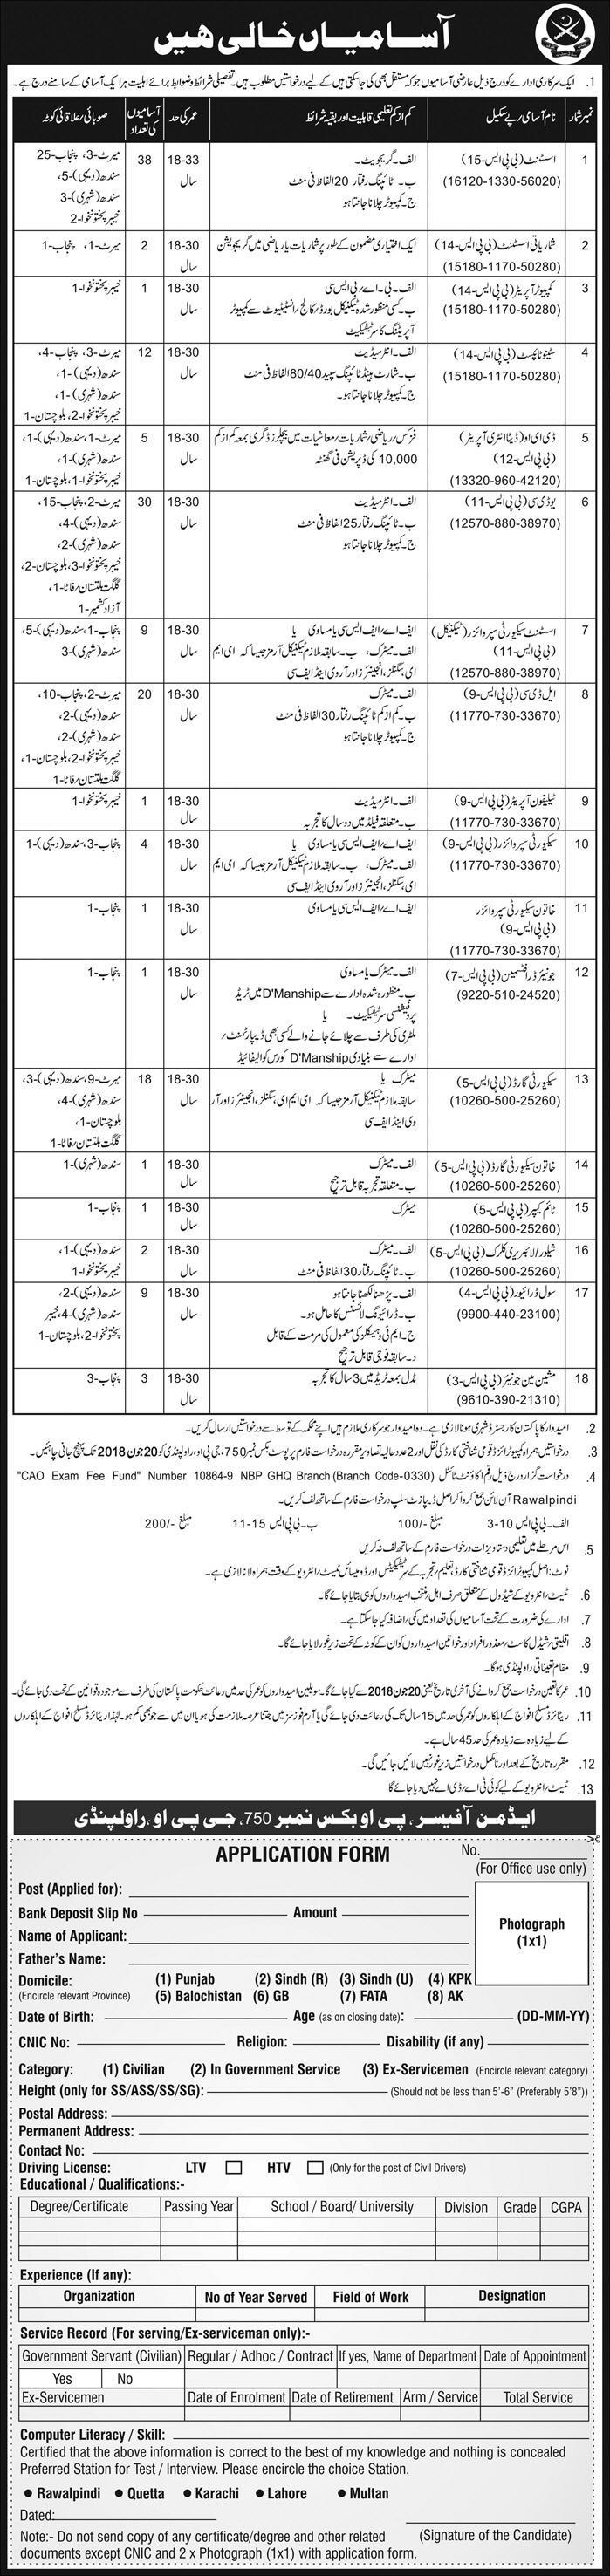 Jobs in Govt Organization in Rawalpindi 01 June 2018